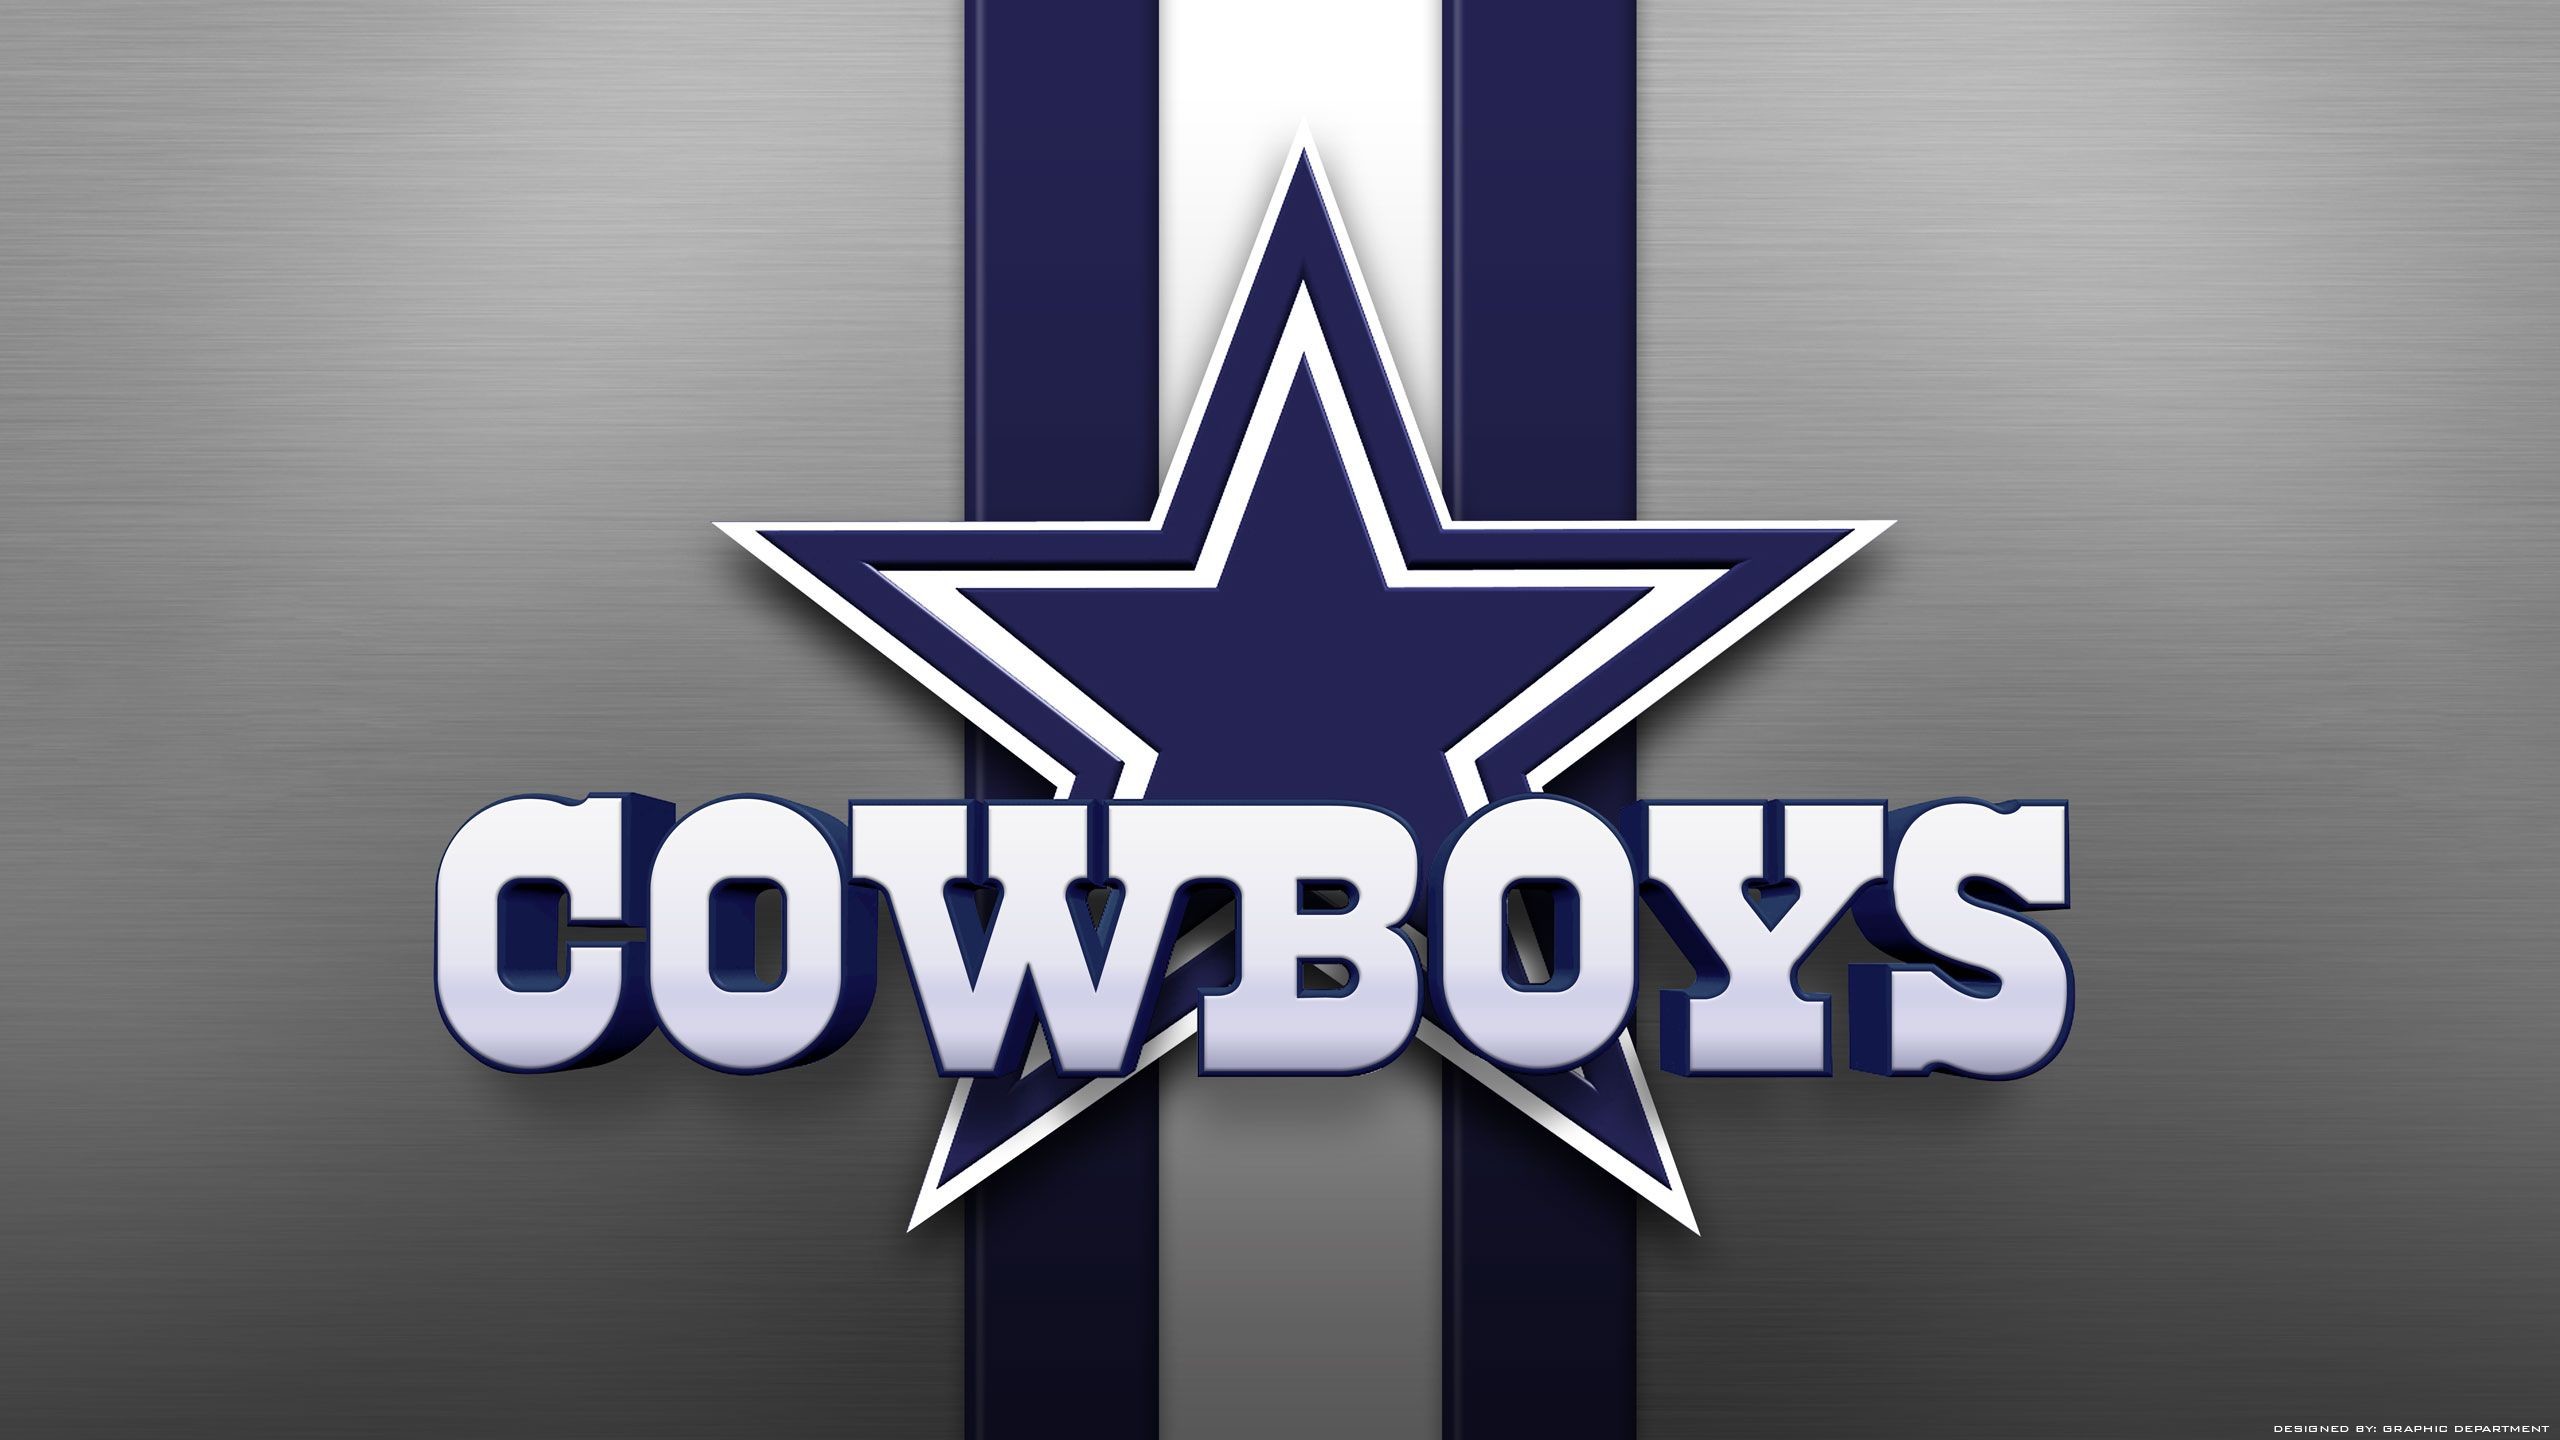 2560x1440 ... 25 best Dallas cowboys football wallpapers ideas on Pinterest .